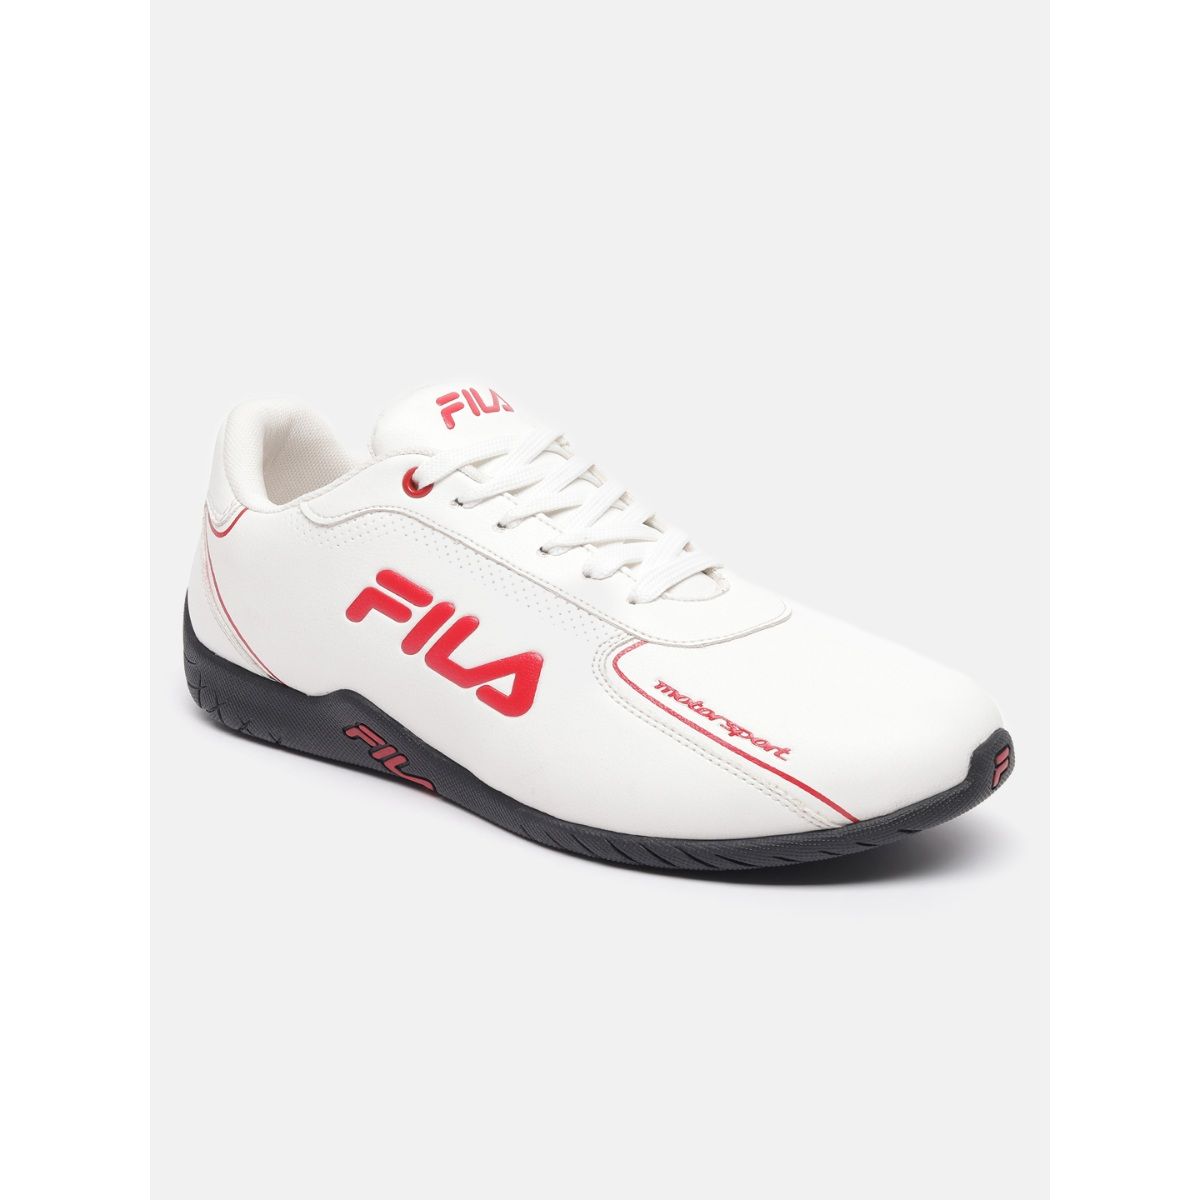 Fila Disruptor II Premium Fashion Sneaker | Zappos.com